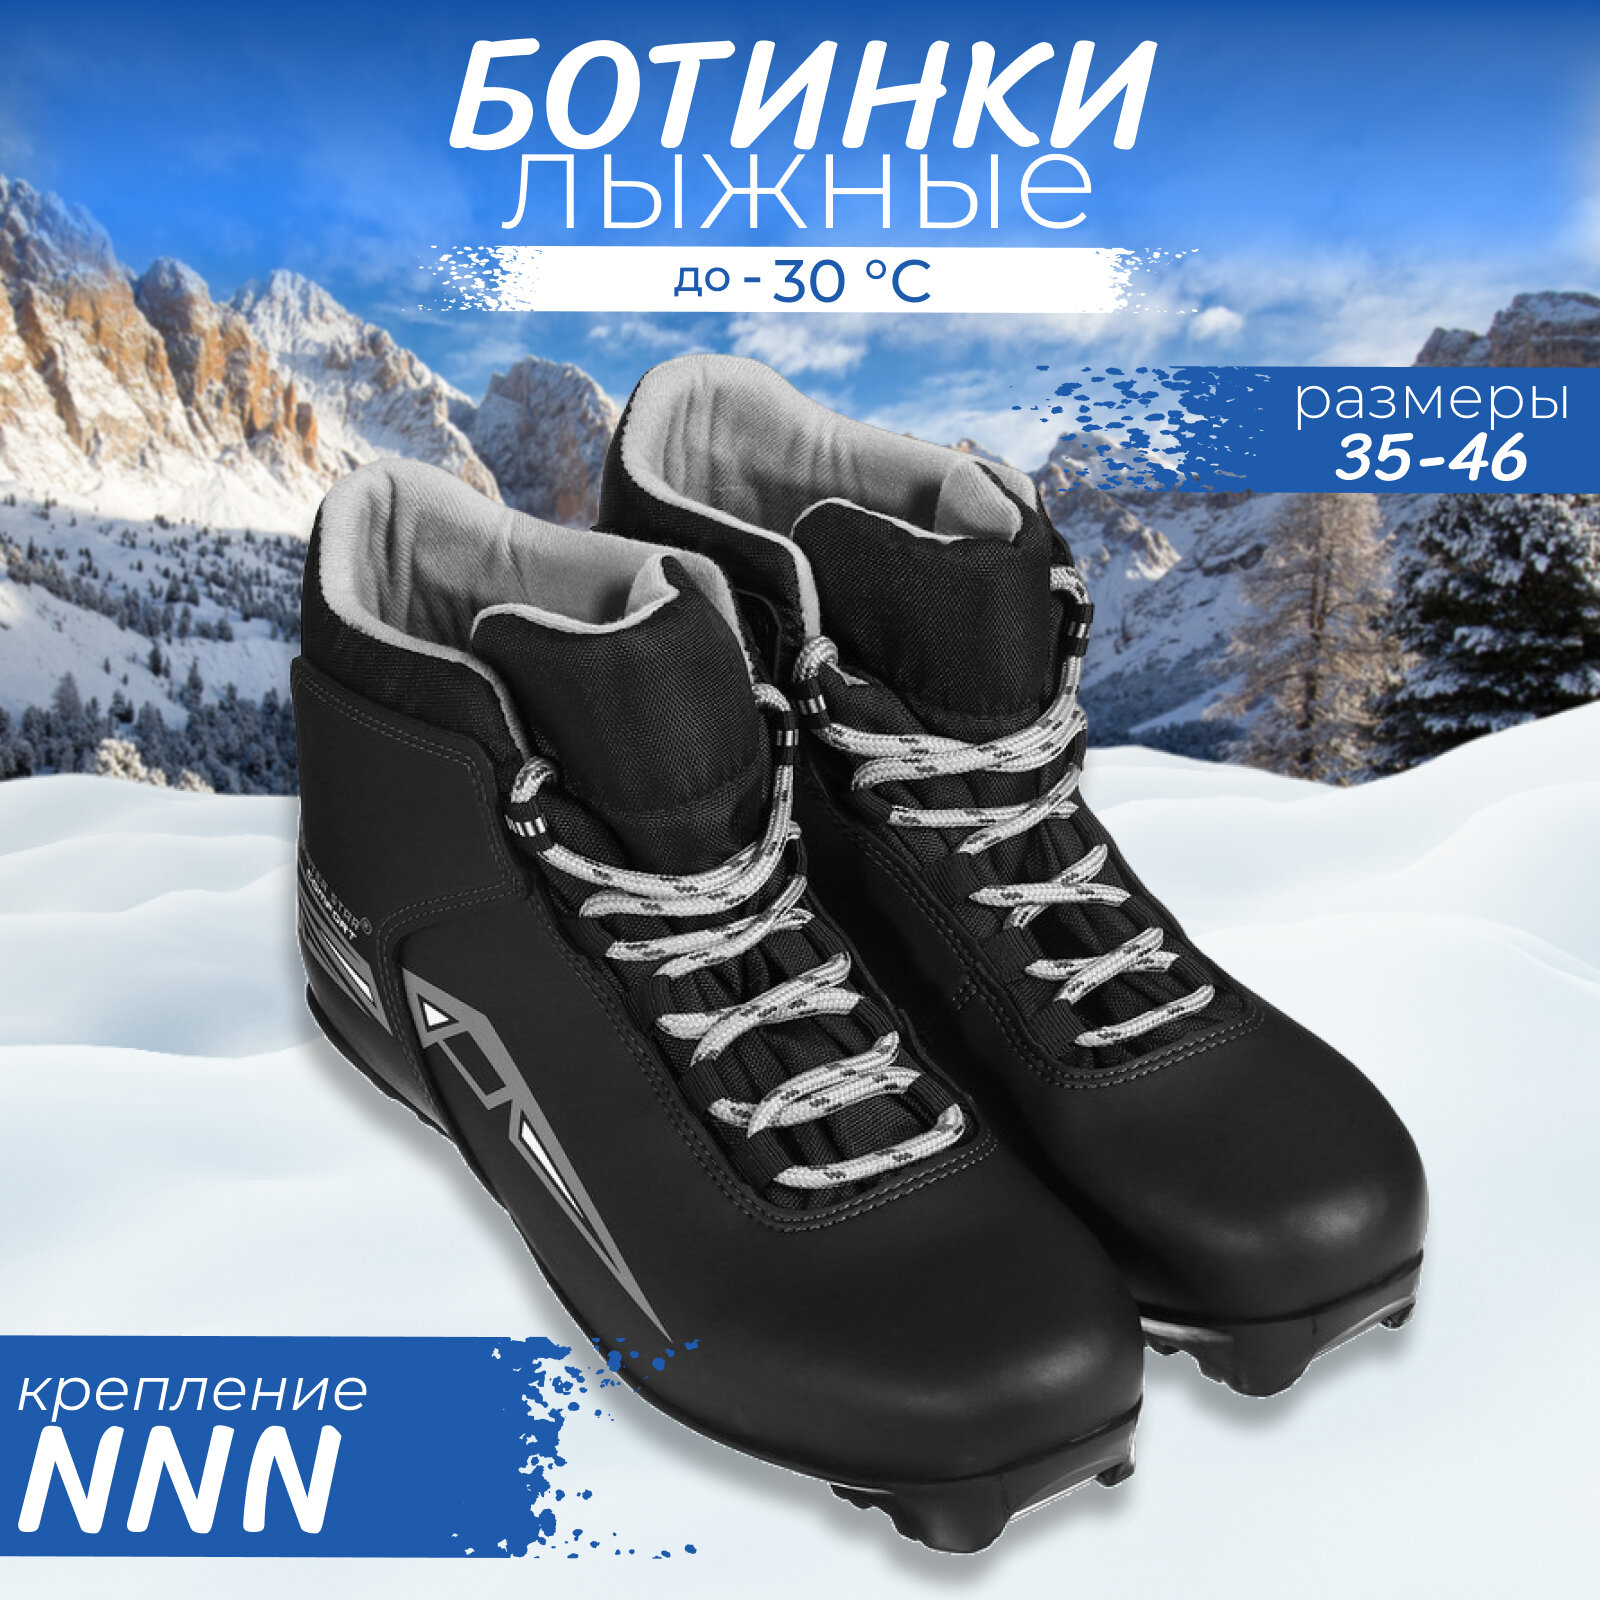 Ботинки лыжные Winter Star comfort, NNN, размер 35, цвет чёрный, серый